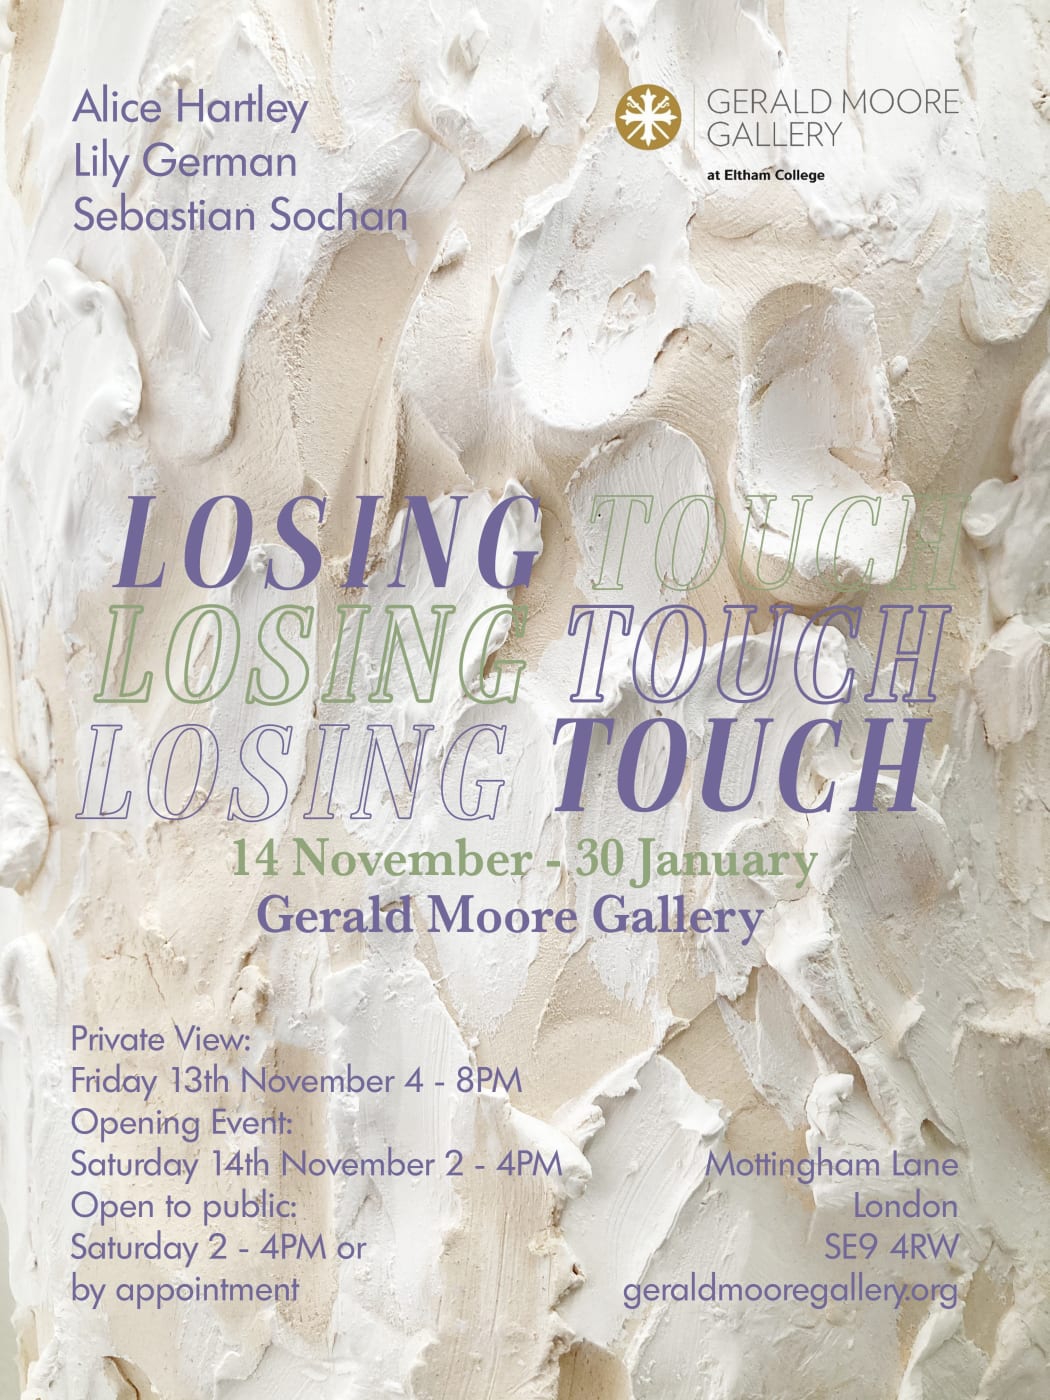 New exhibition opening 13 November